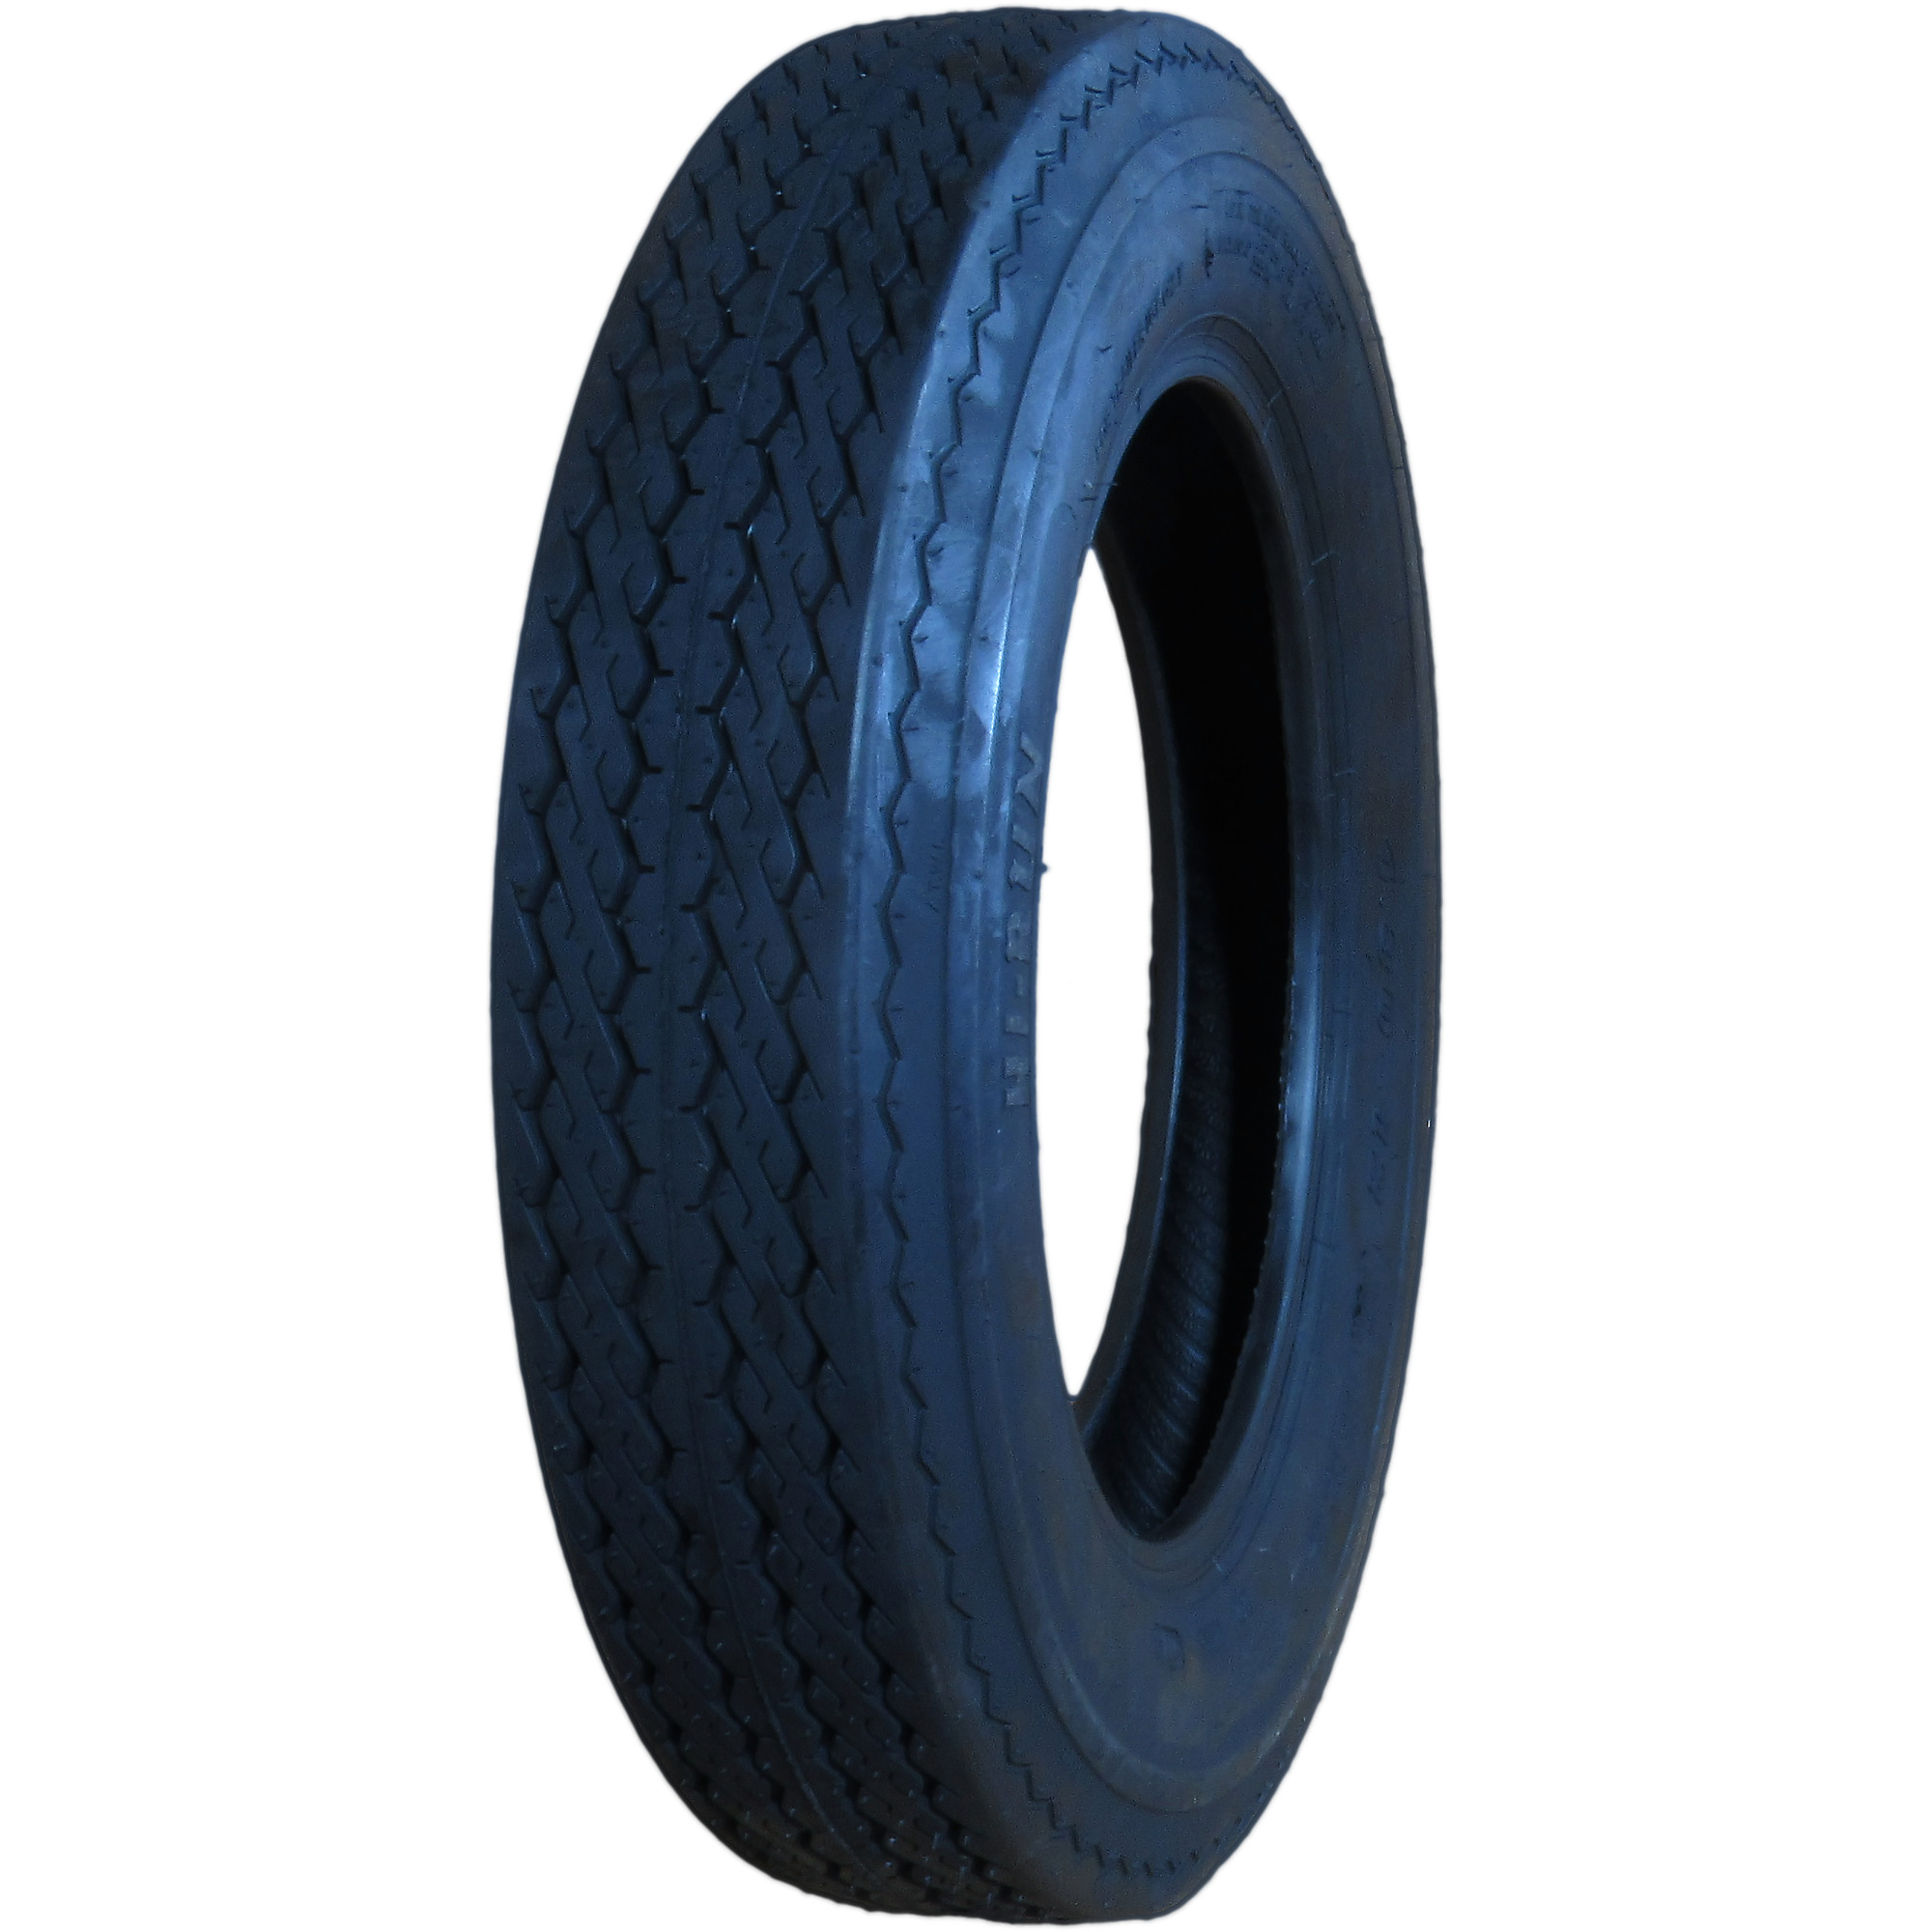 HI-RUN, Highway Trailer Tire, Bias-ply, Tire Size 5.30-12 Load Range Rating C, Model WD1004